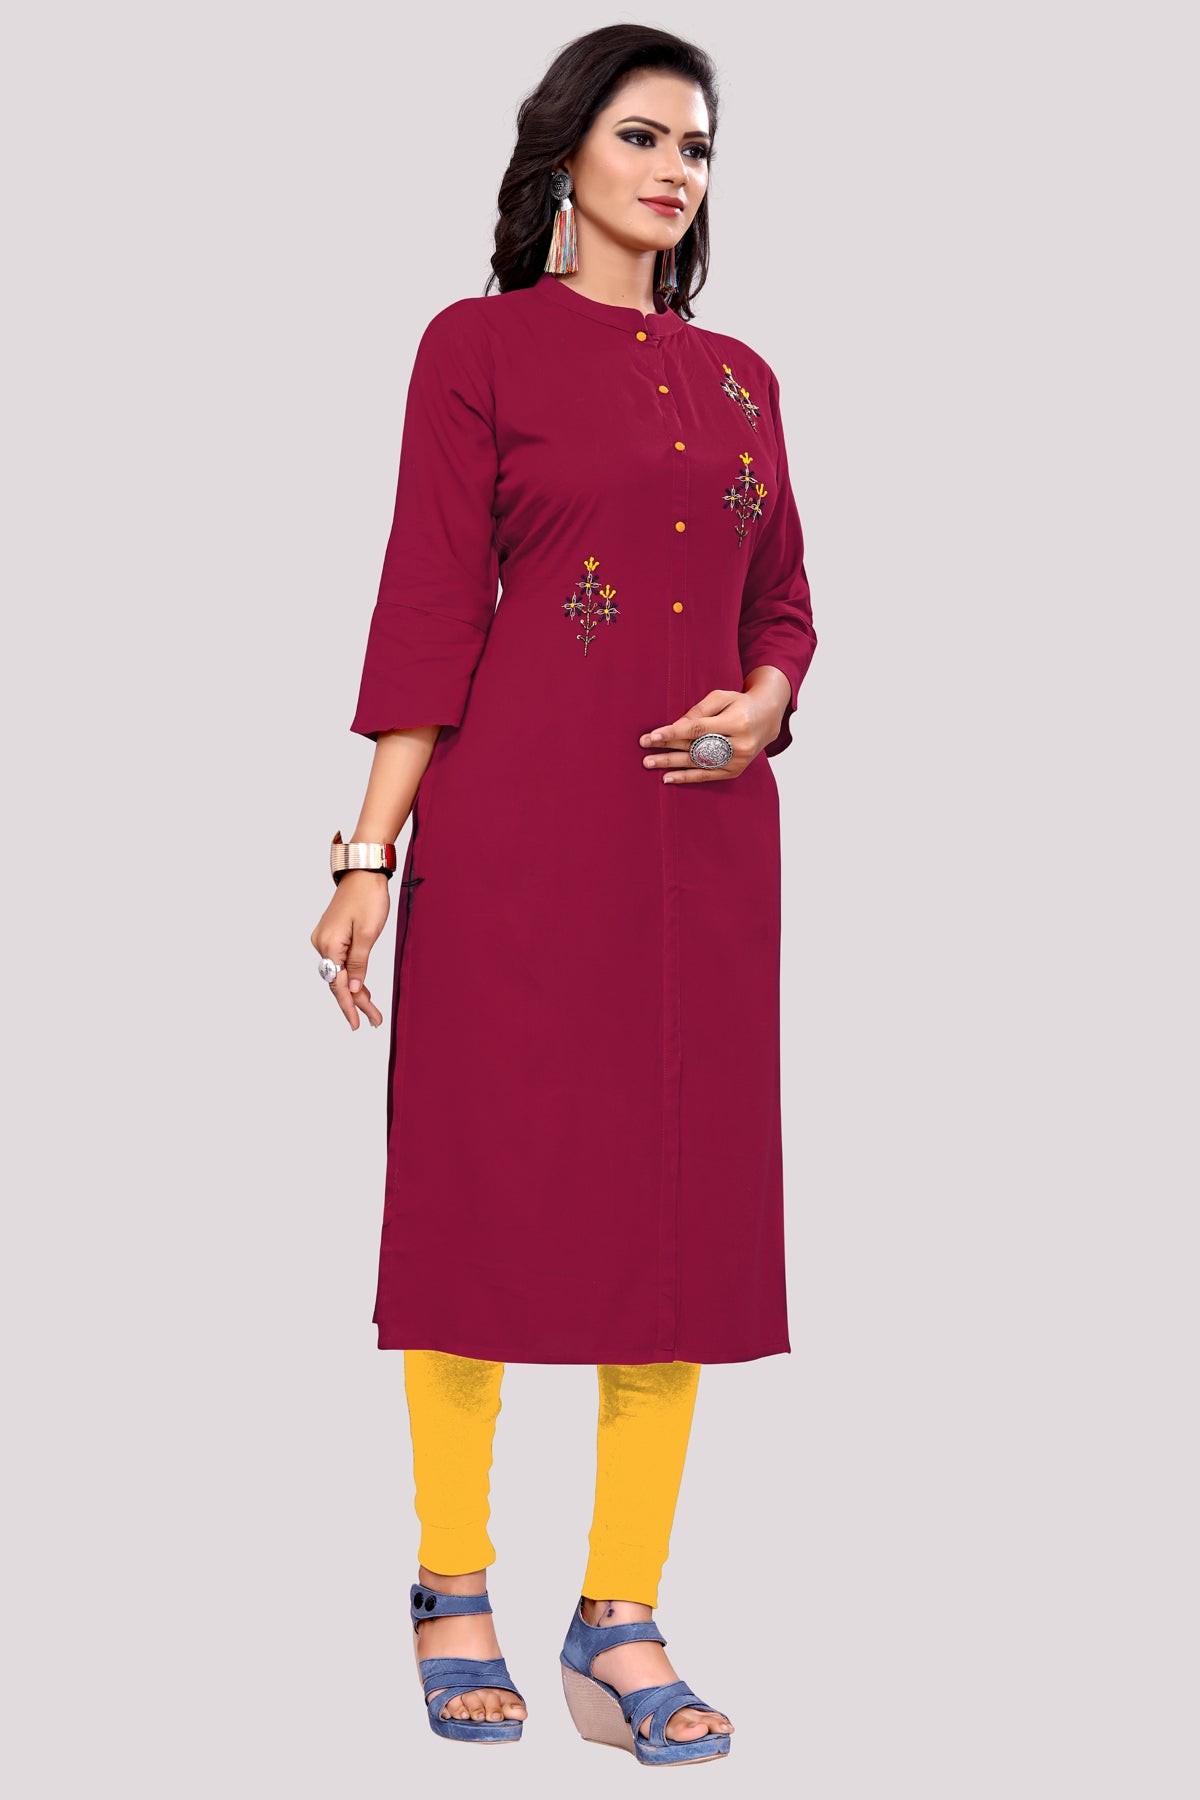 Buy Designer Purple kurti with stylish handwork